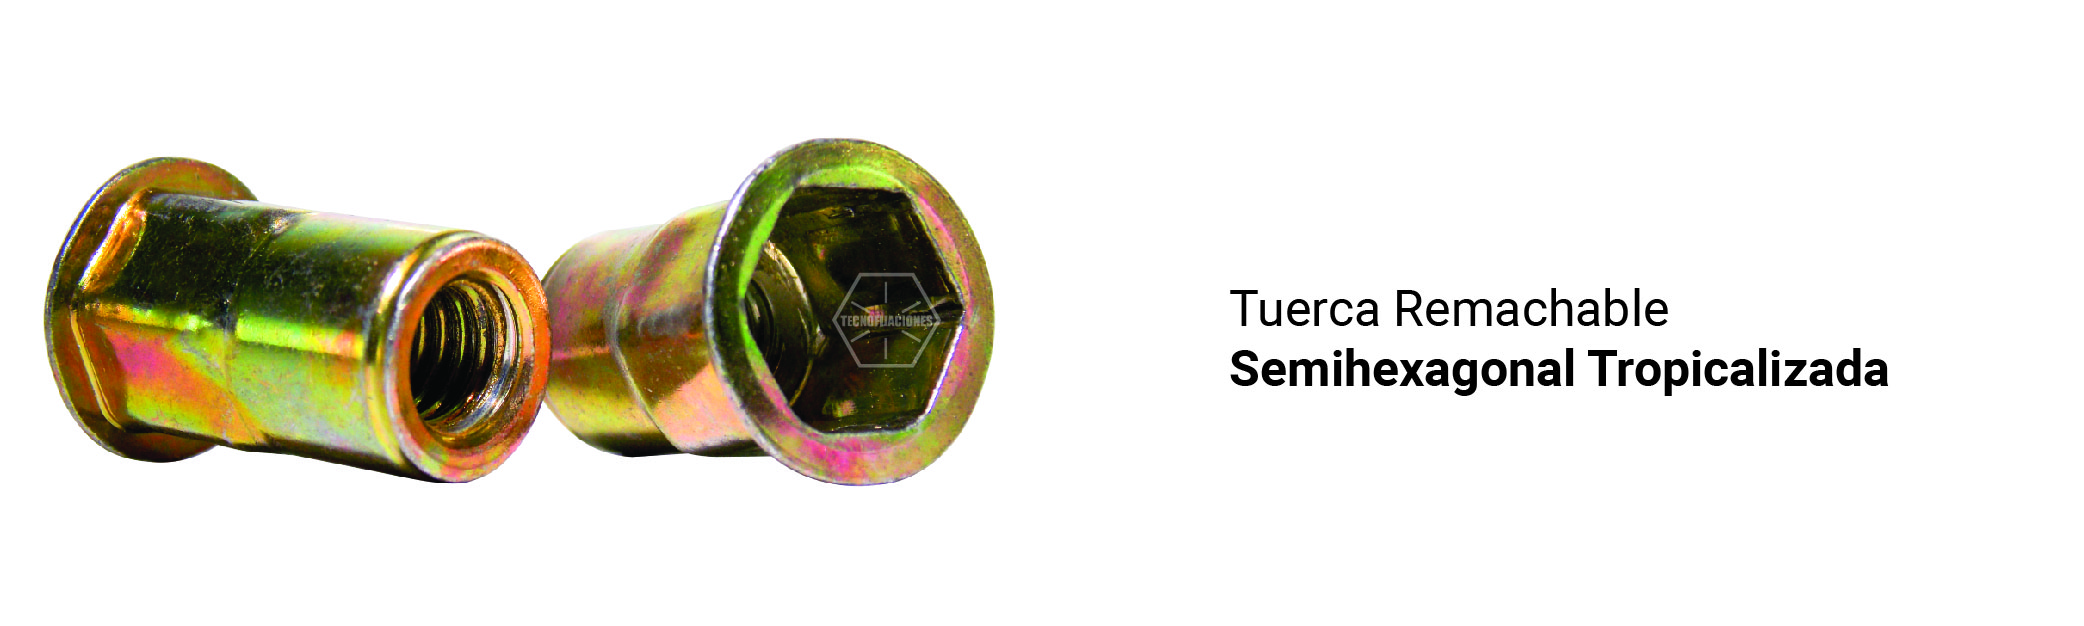 Tuerca Remachable Semi-hexagonal Tropicalizada